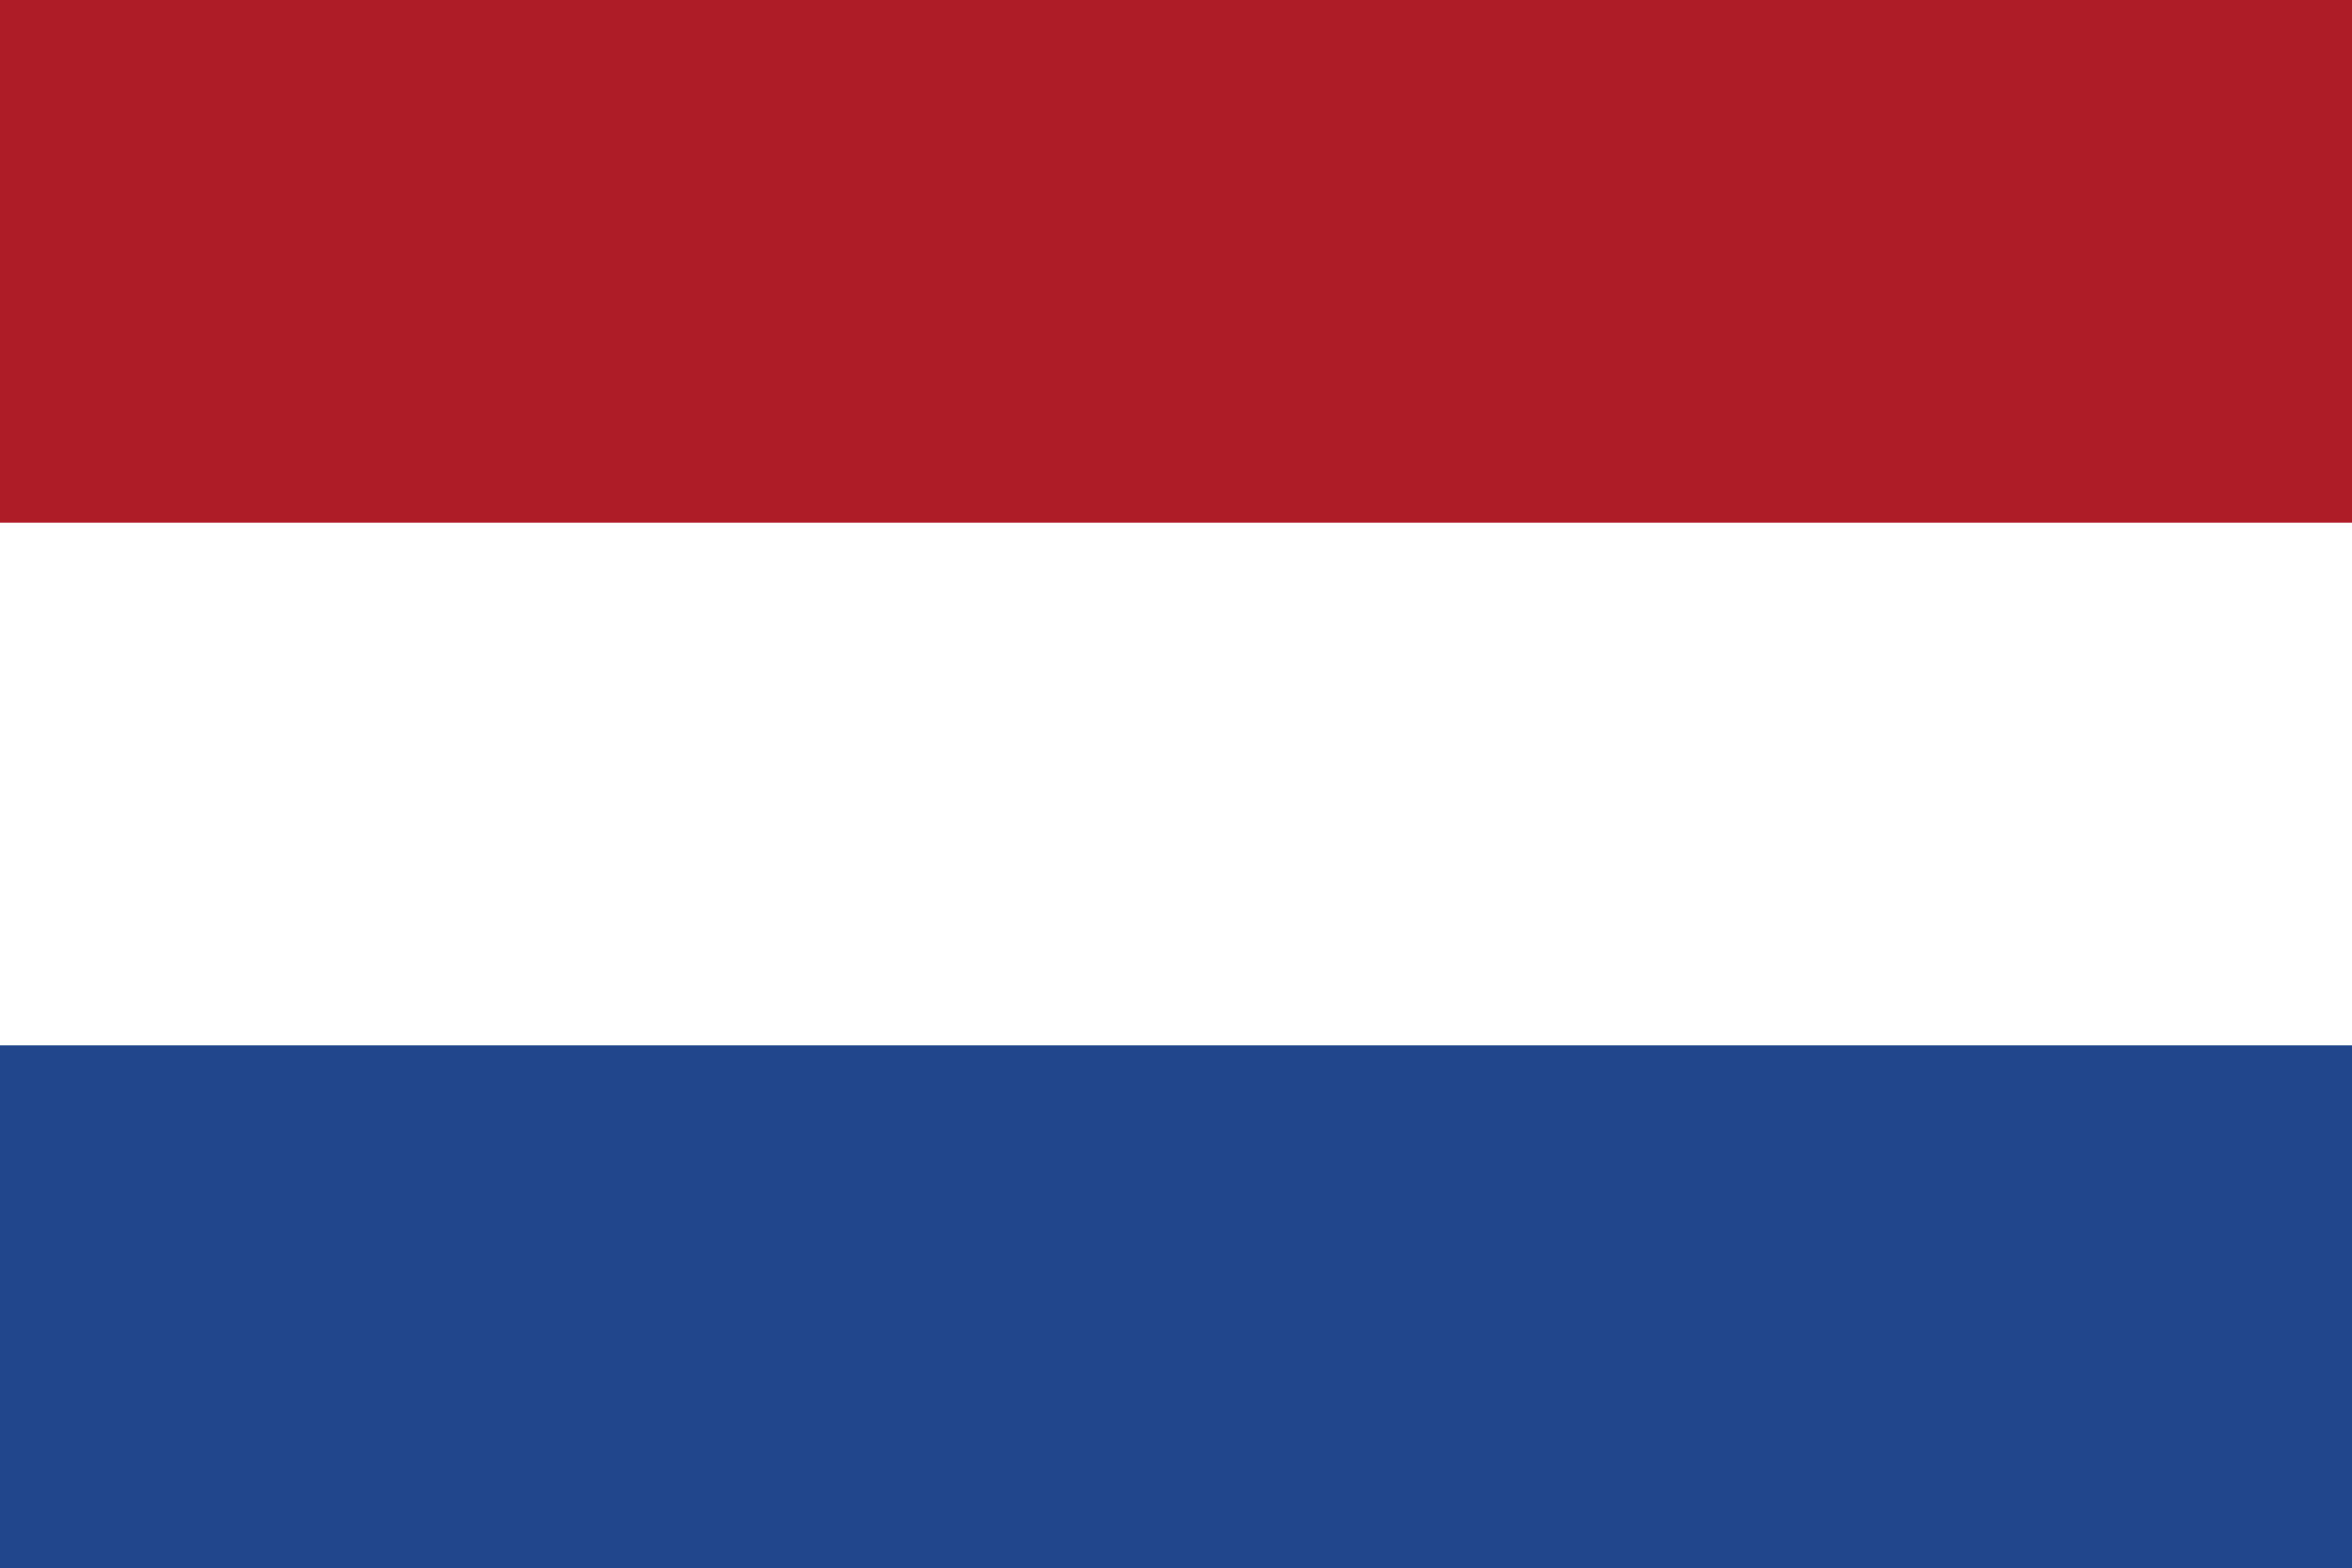 Free photo: Nederlands flag, Hex, Hexagon